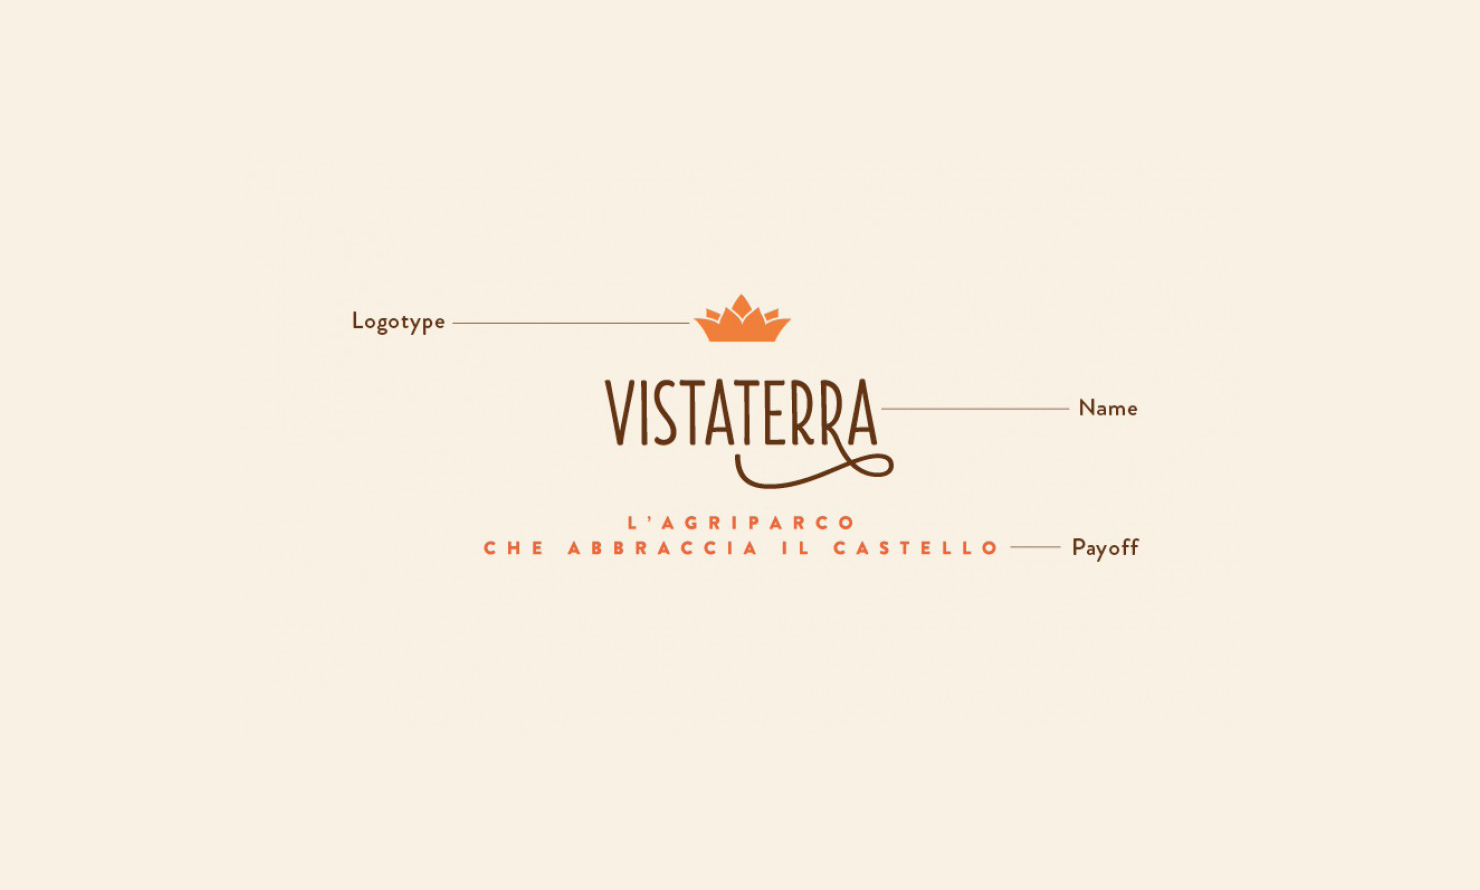 https://kubelibre.com/uploads/Slider-work-tutti-clienti/manital-vistaterra-l-agriparco-che-abbraccia-il-castello-brand-identity-brand-strategy-9.jpg